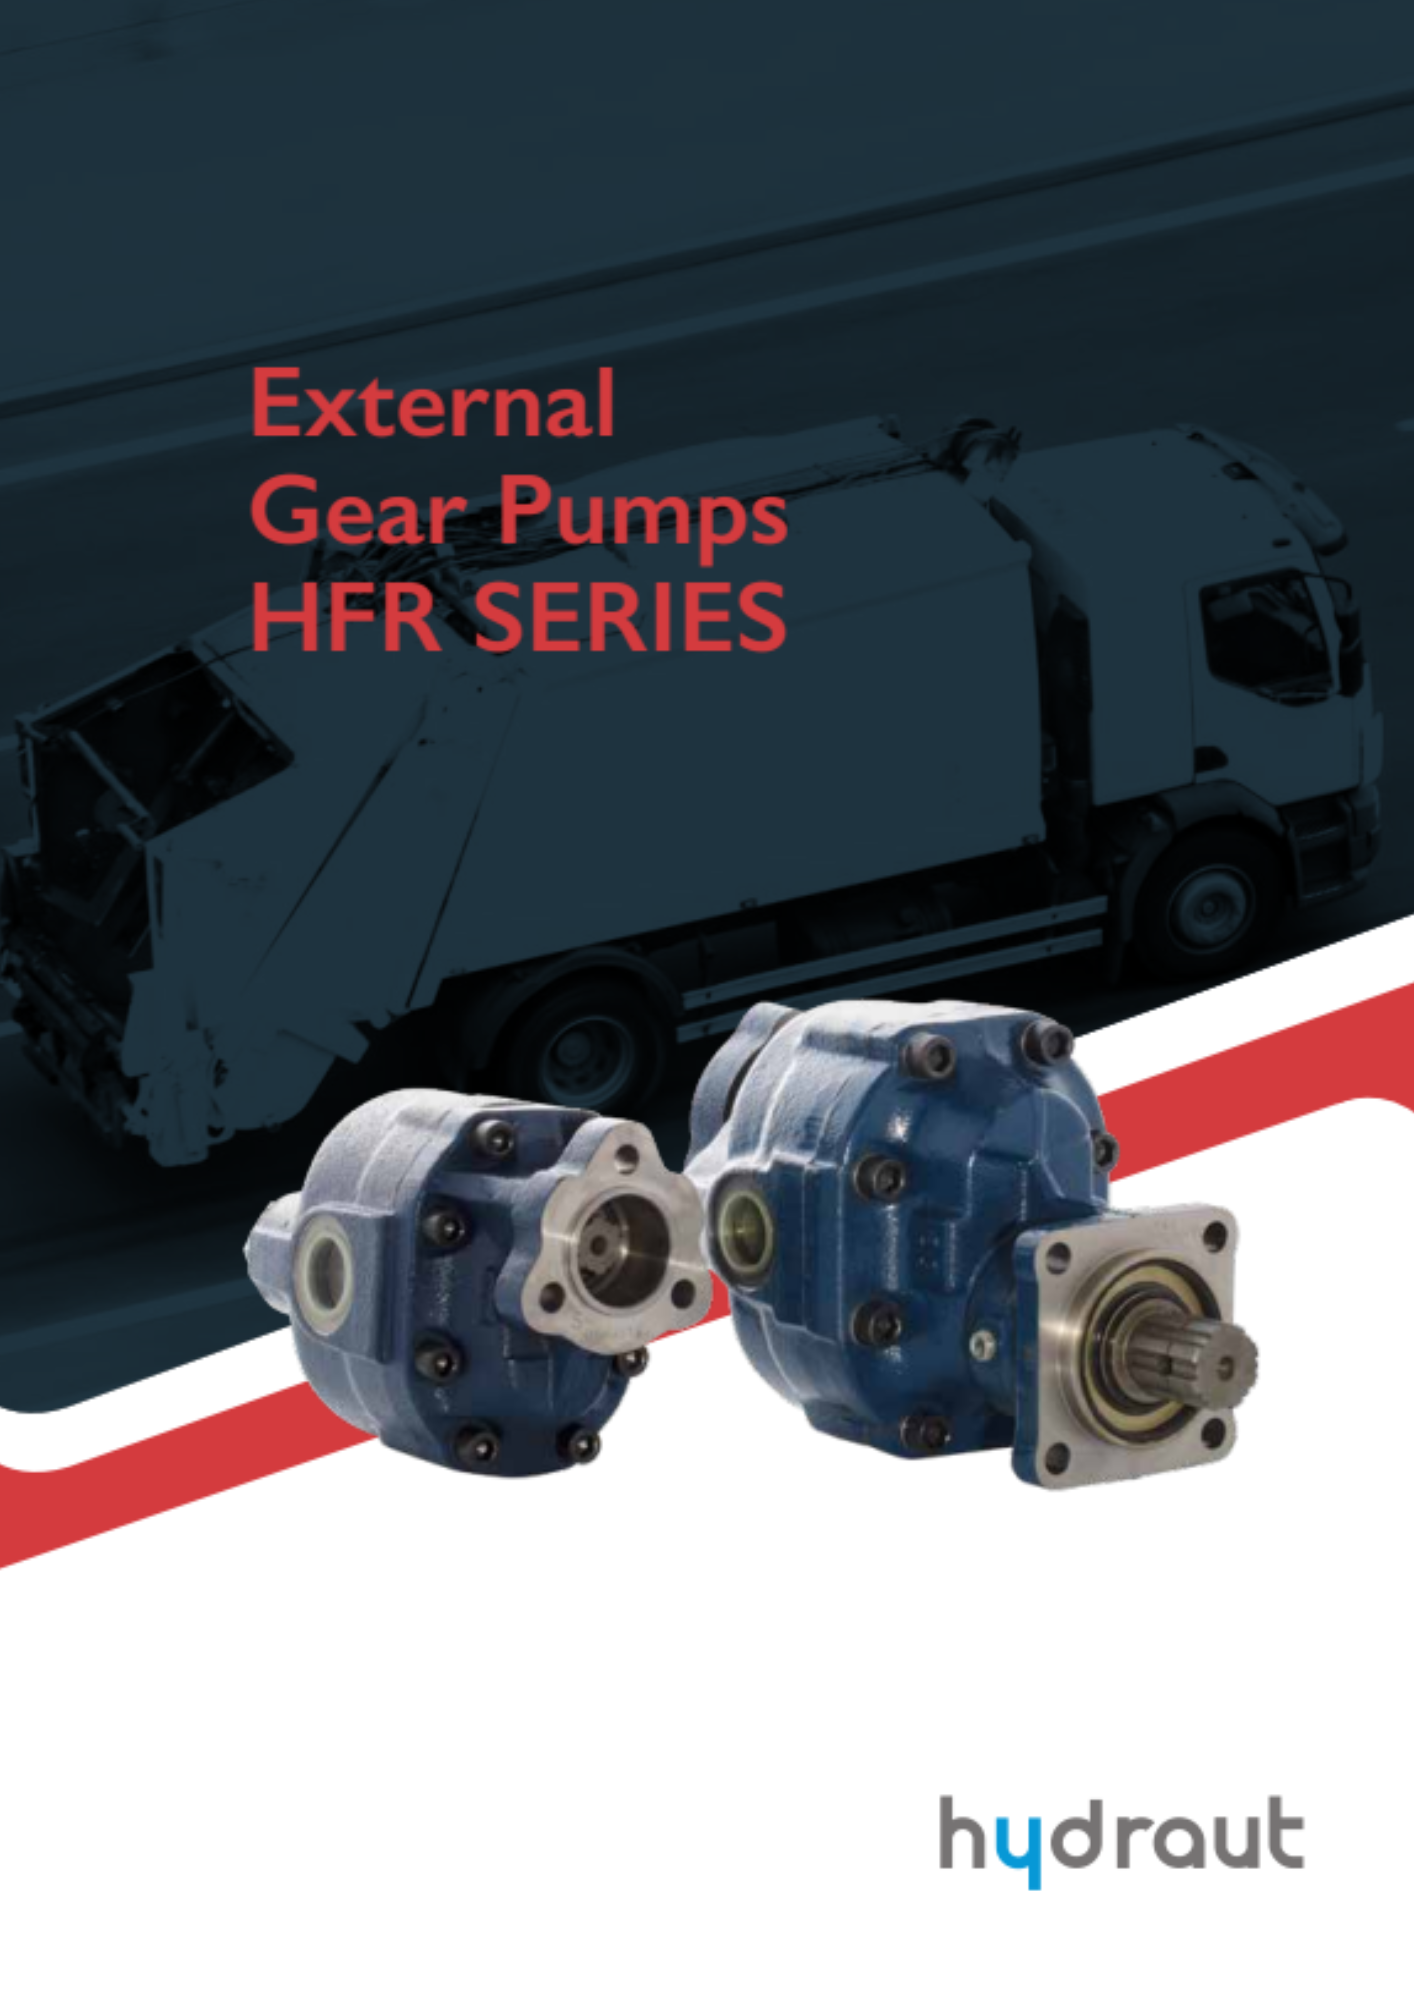 Hydraut: bombas de engranajes externos HFR